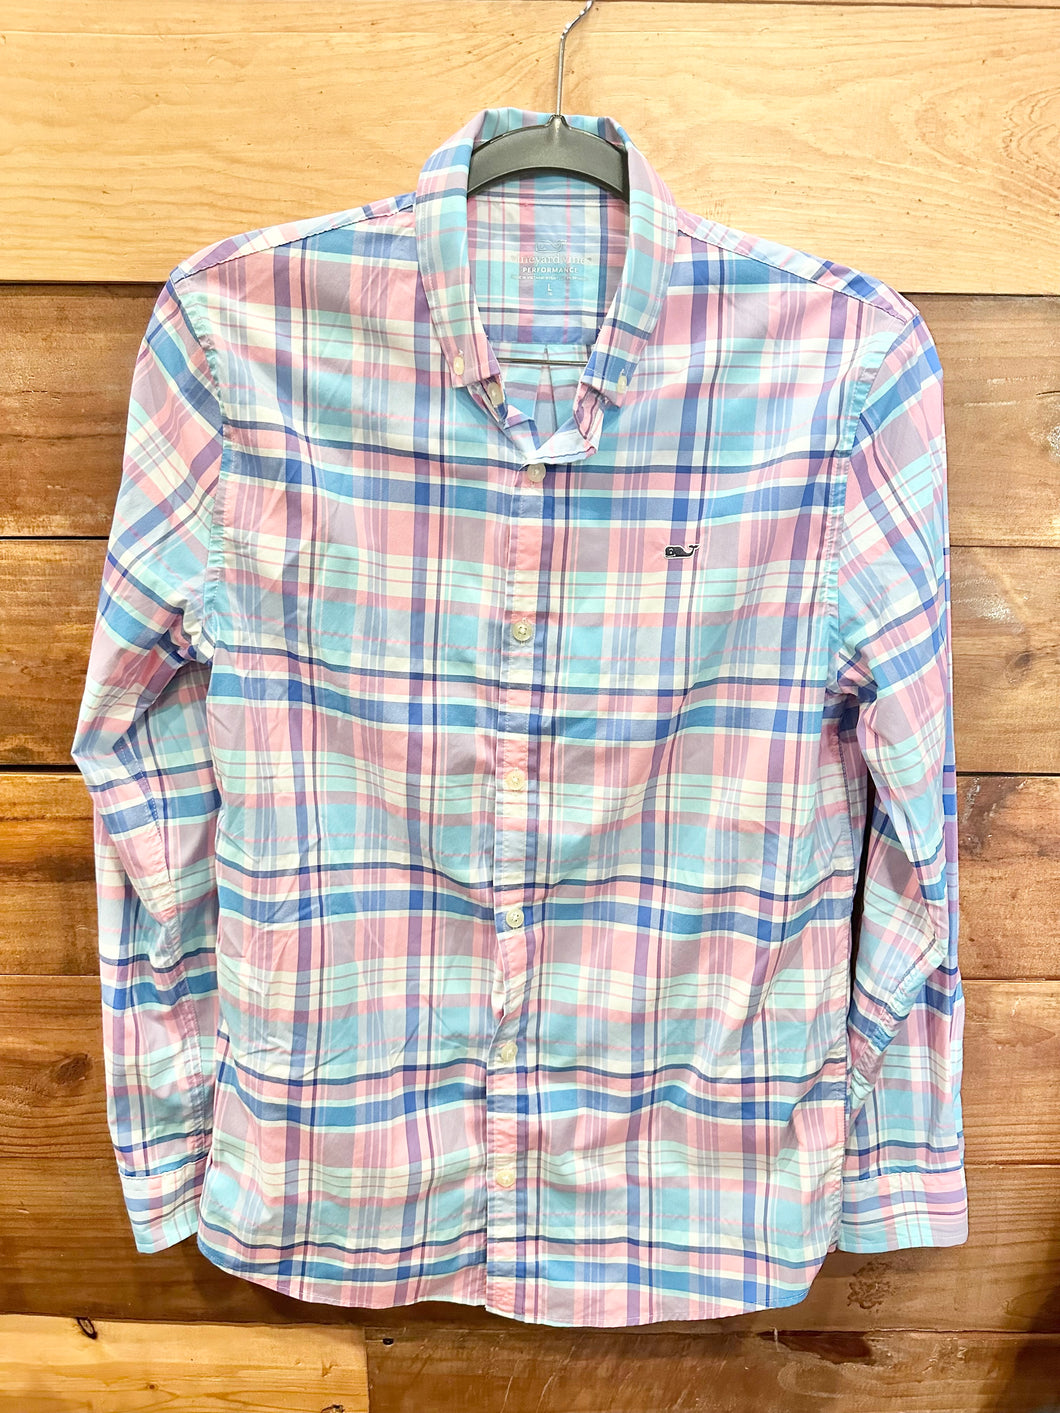 Vineyard Vines Blue & Pink Plaid Shirt Size 16